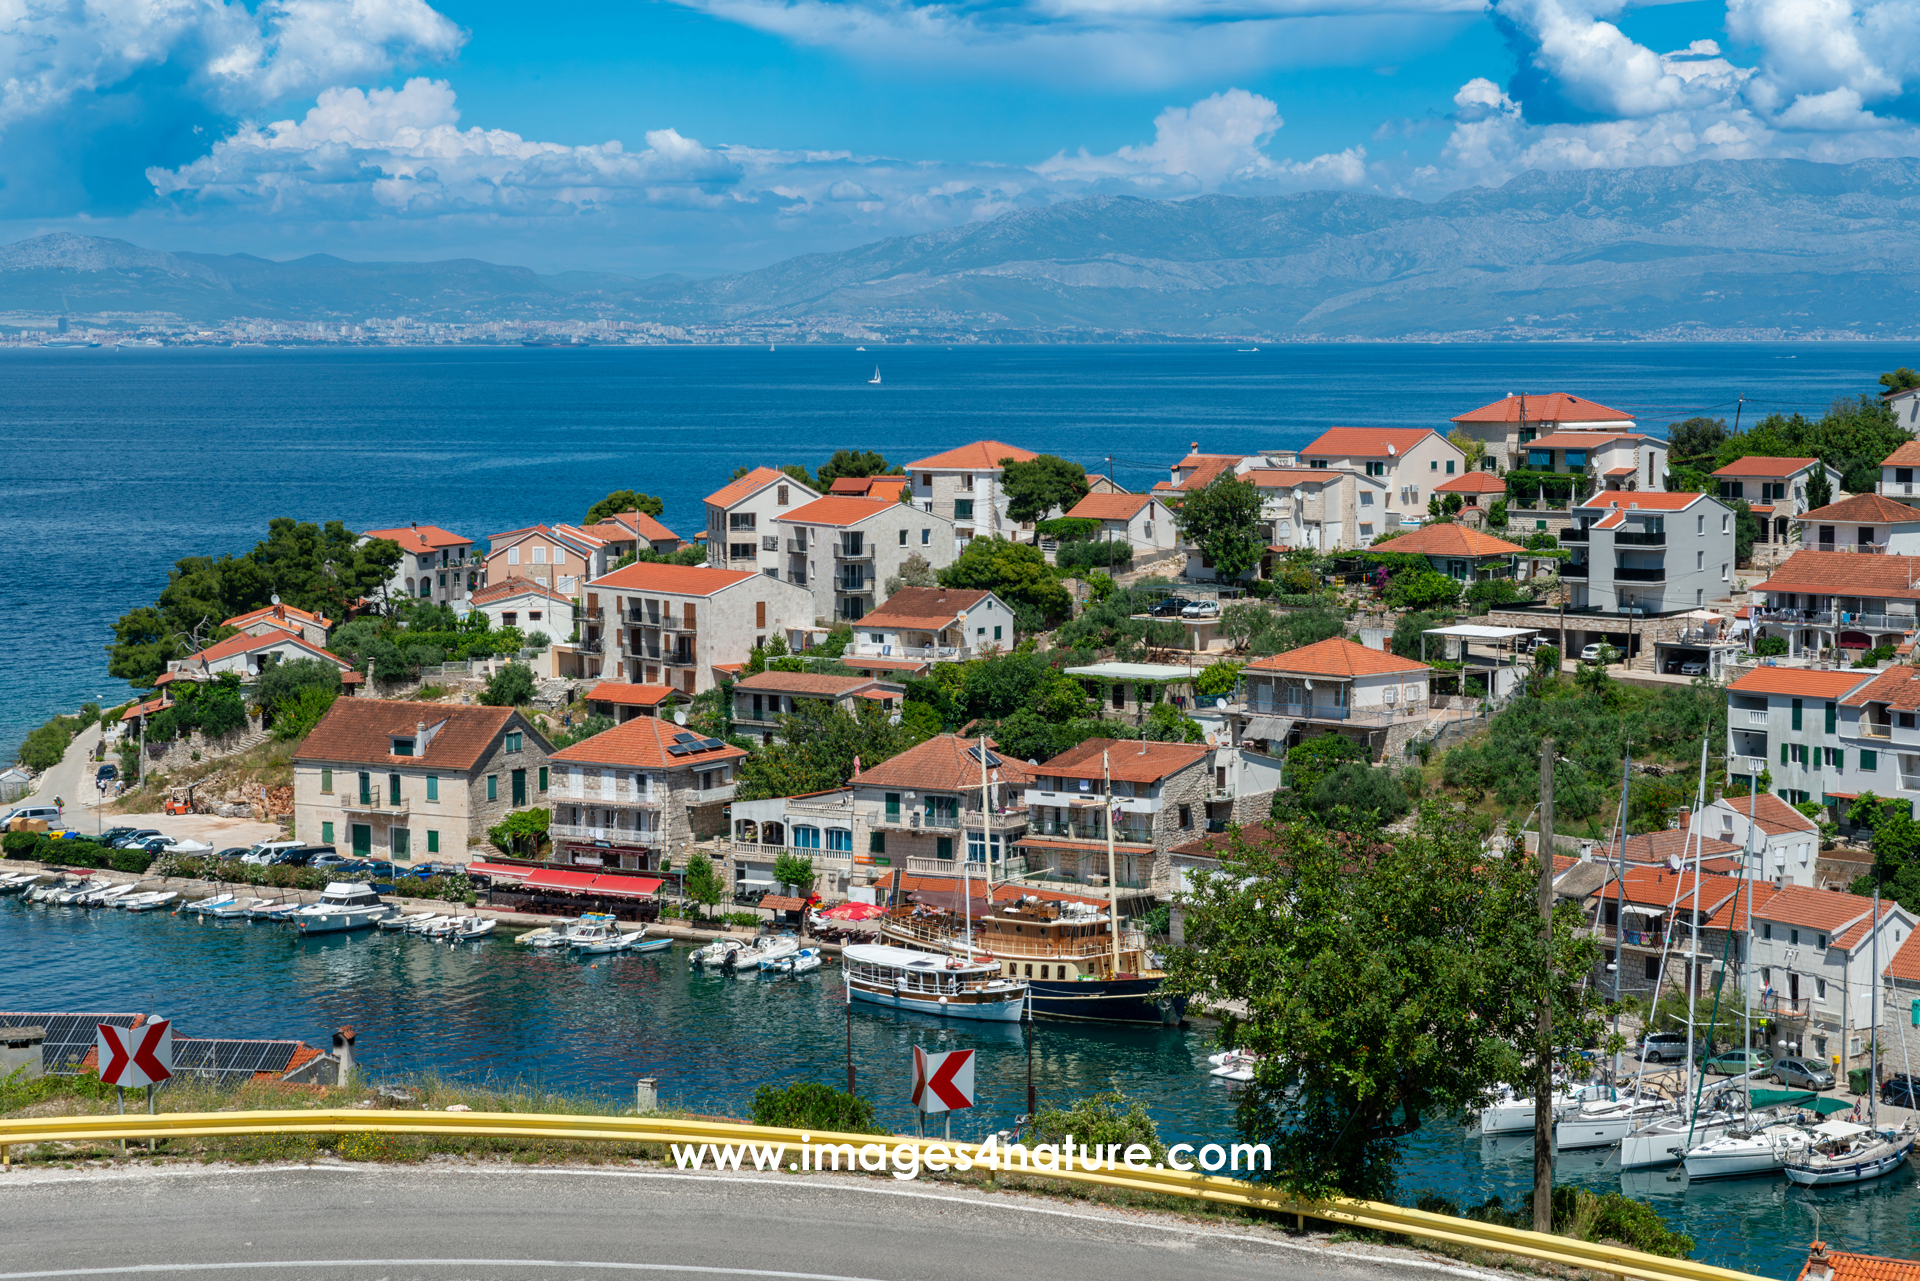 Scenic view of Stomorska village and harbour on Solta island Croatia